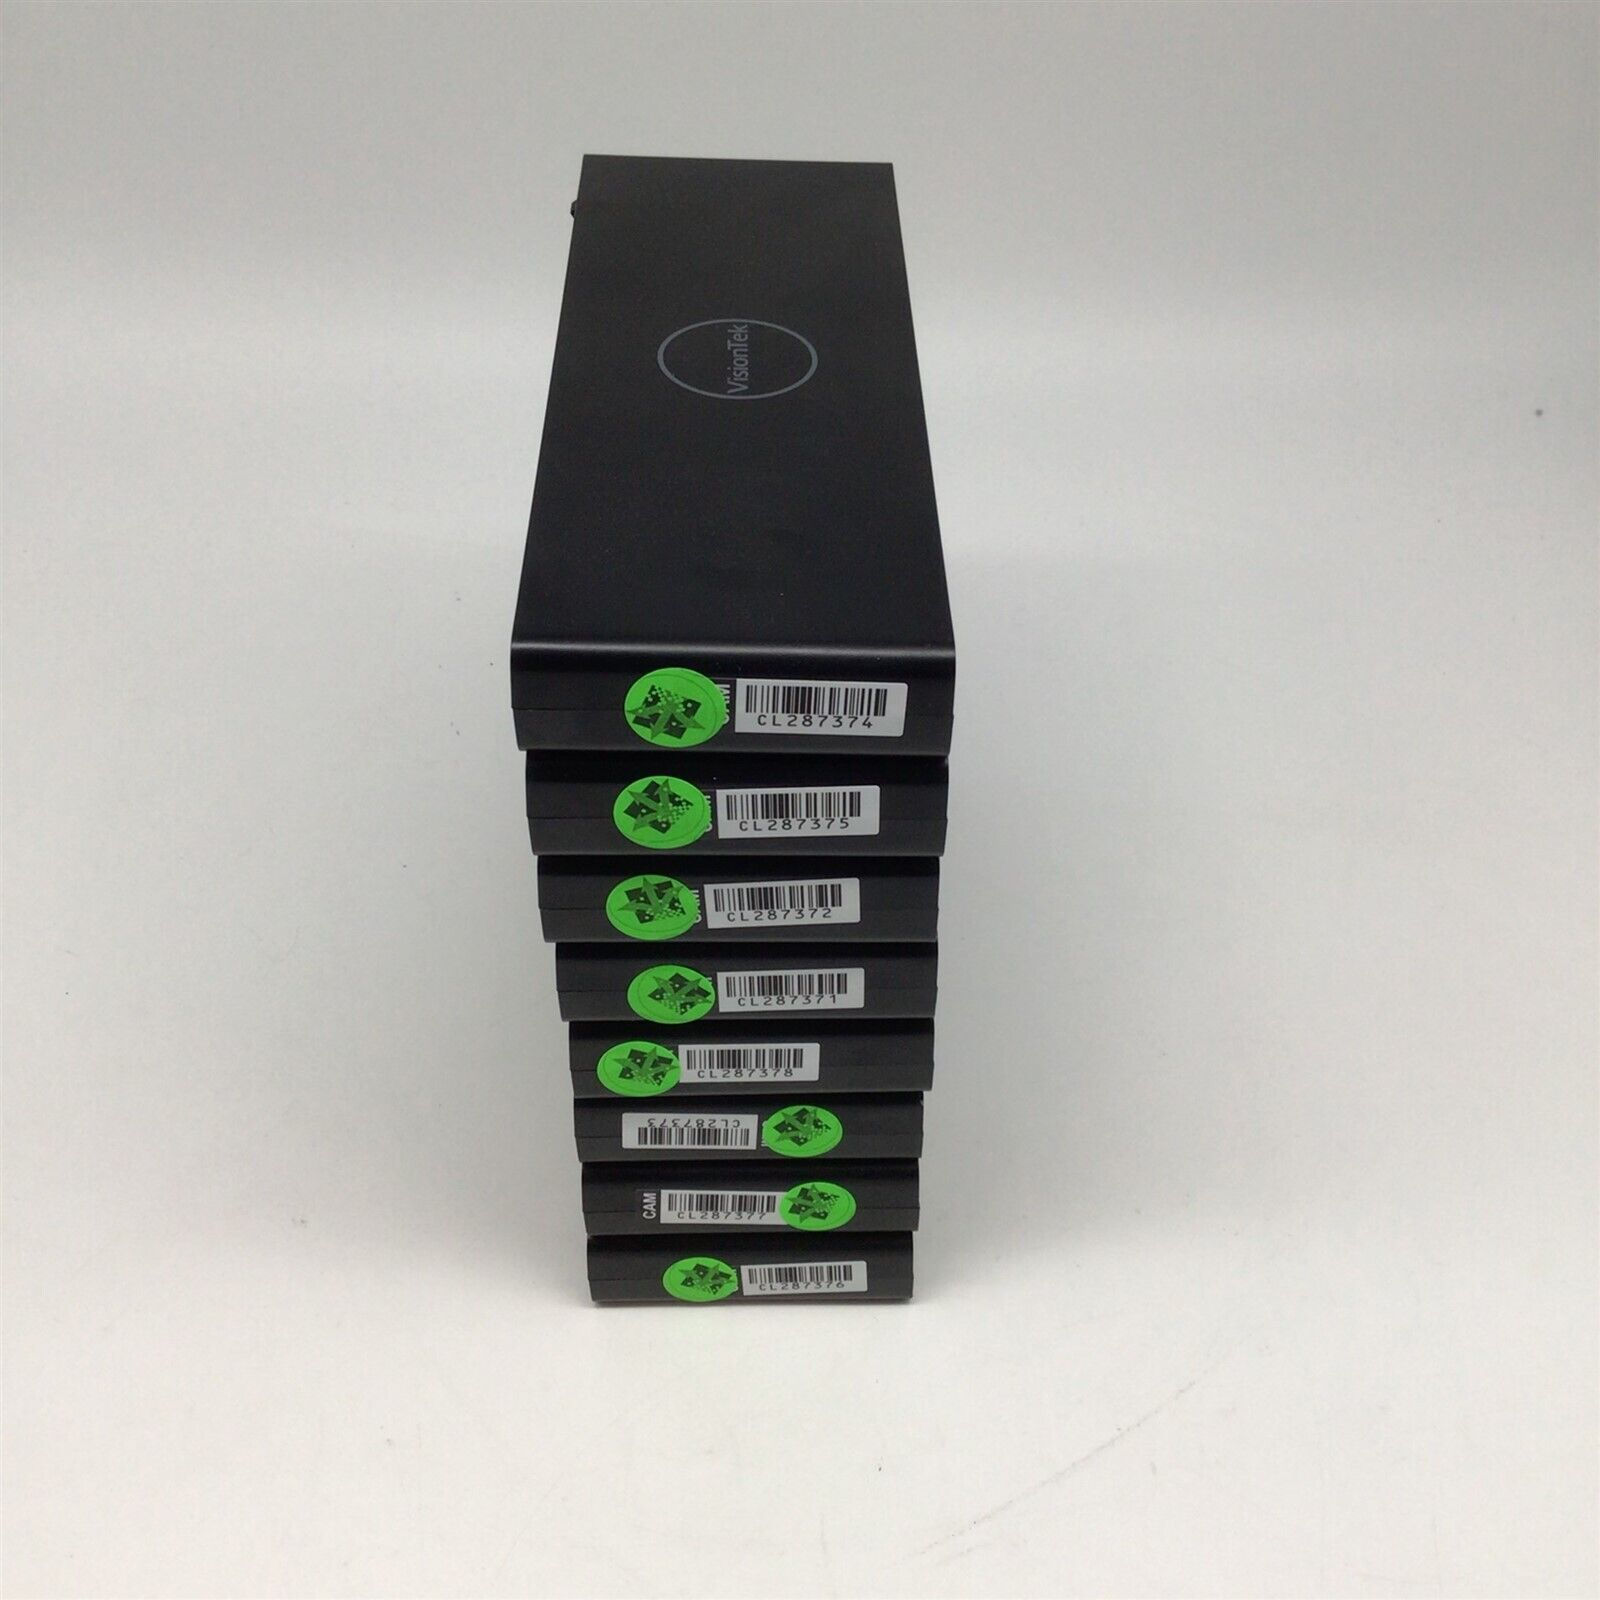 Lot of 8 VisionTek 901005 Universal Dual 4K USB 3.0/USB-C Docking Stations